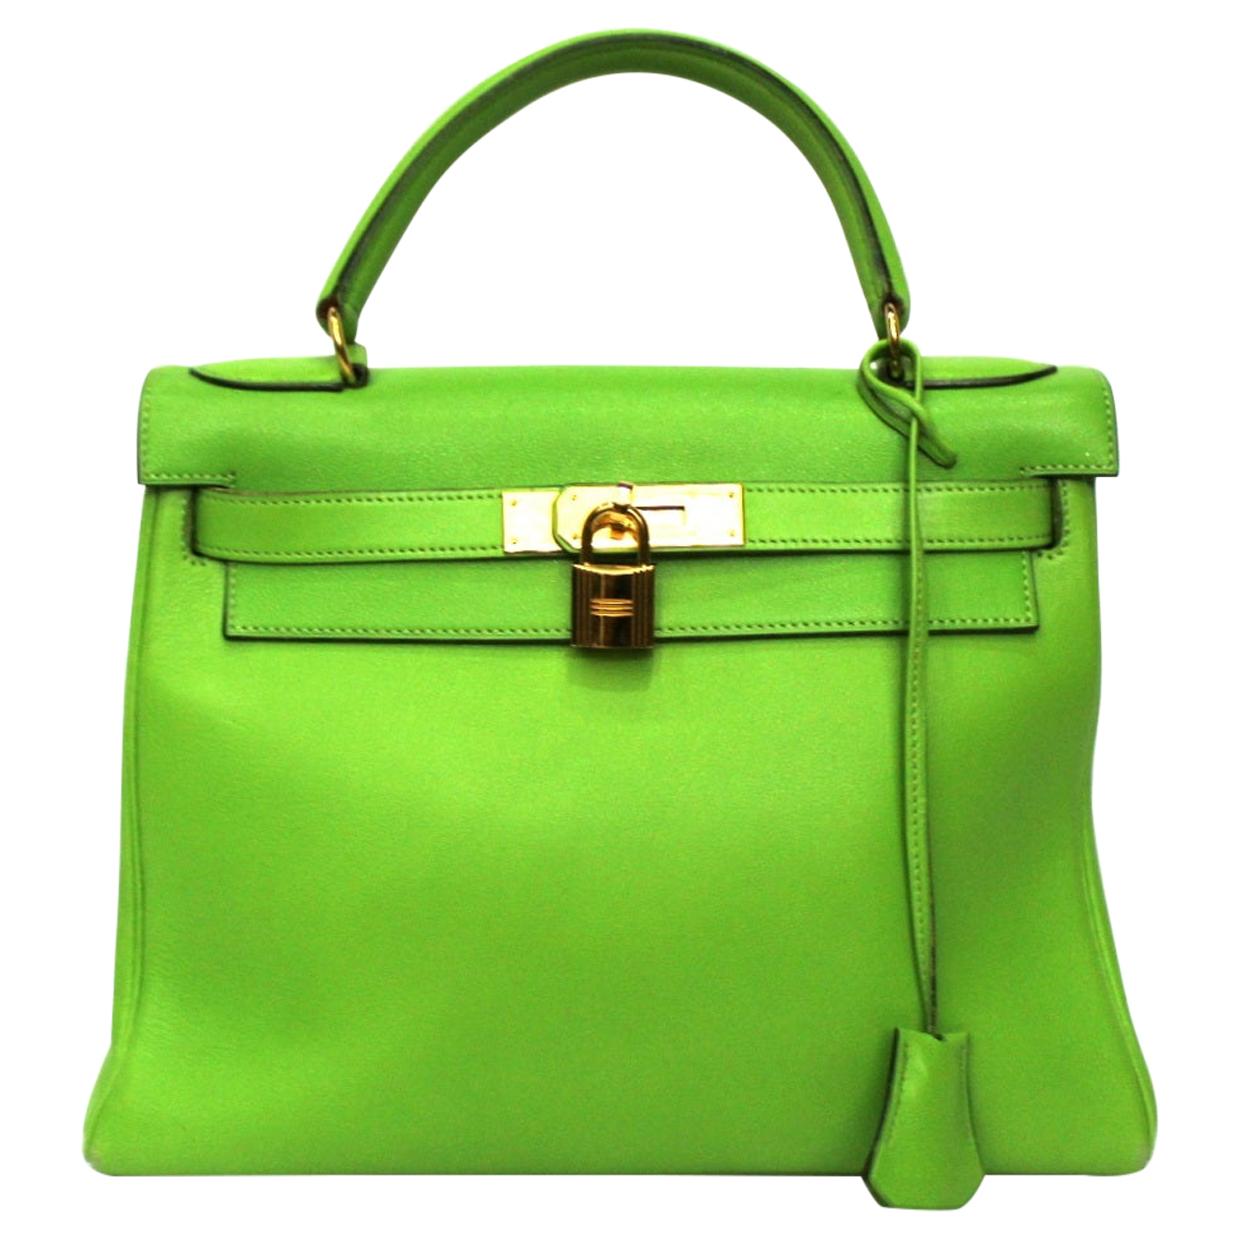 Rare Hermès Kelly 32 sellier handbag double straps in green box